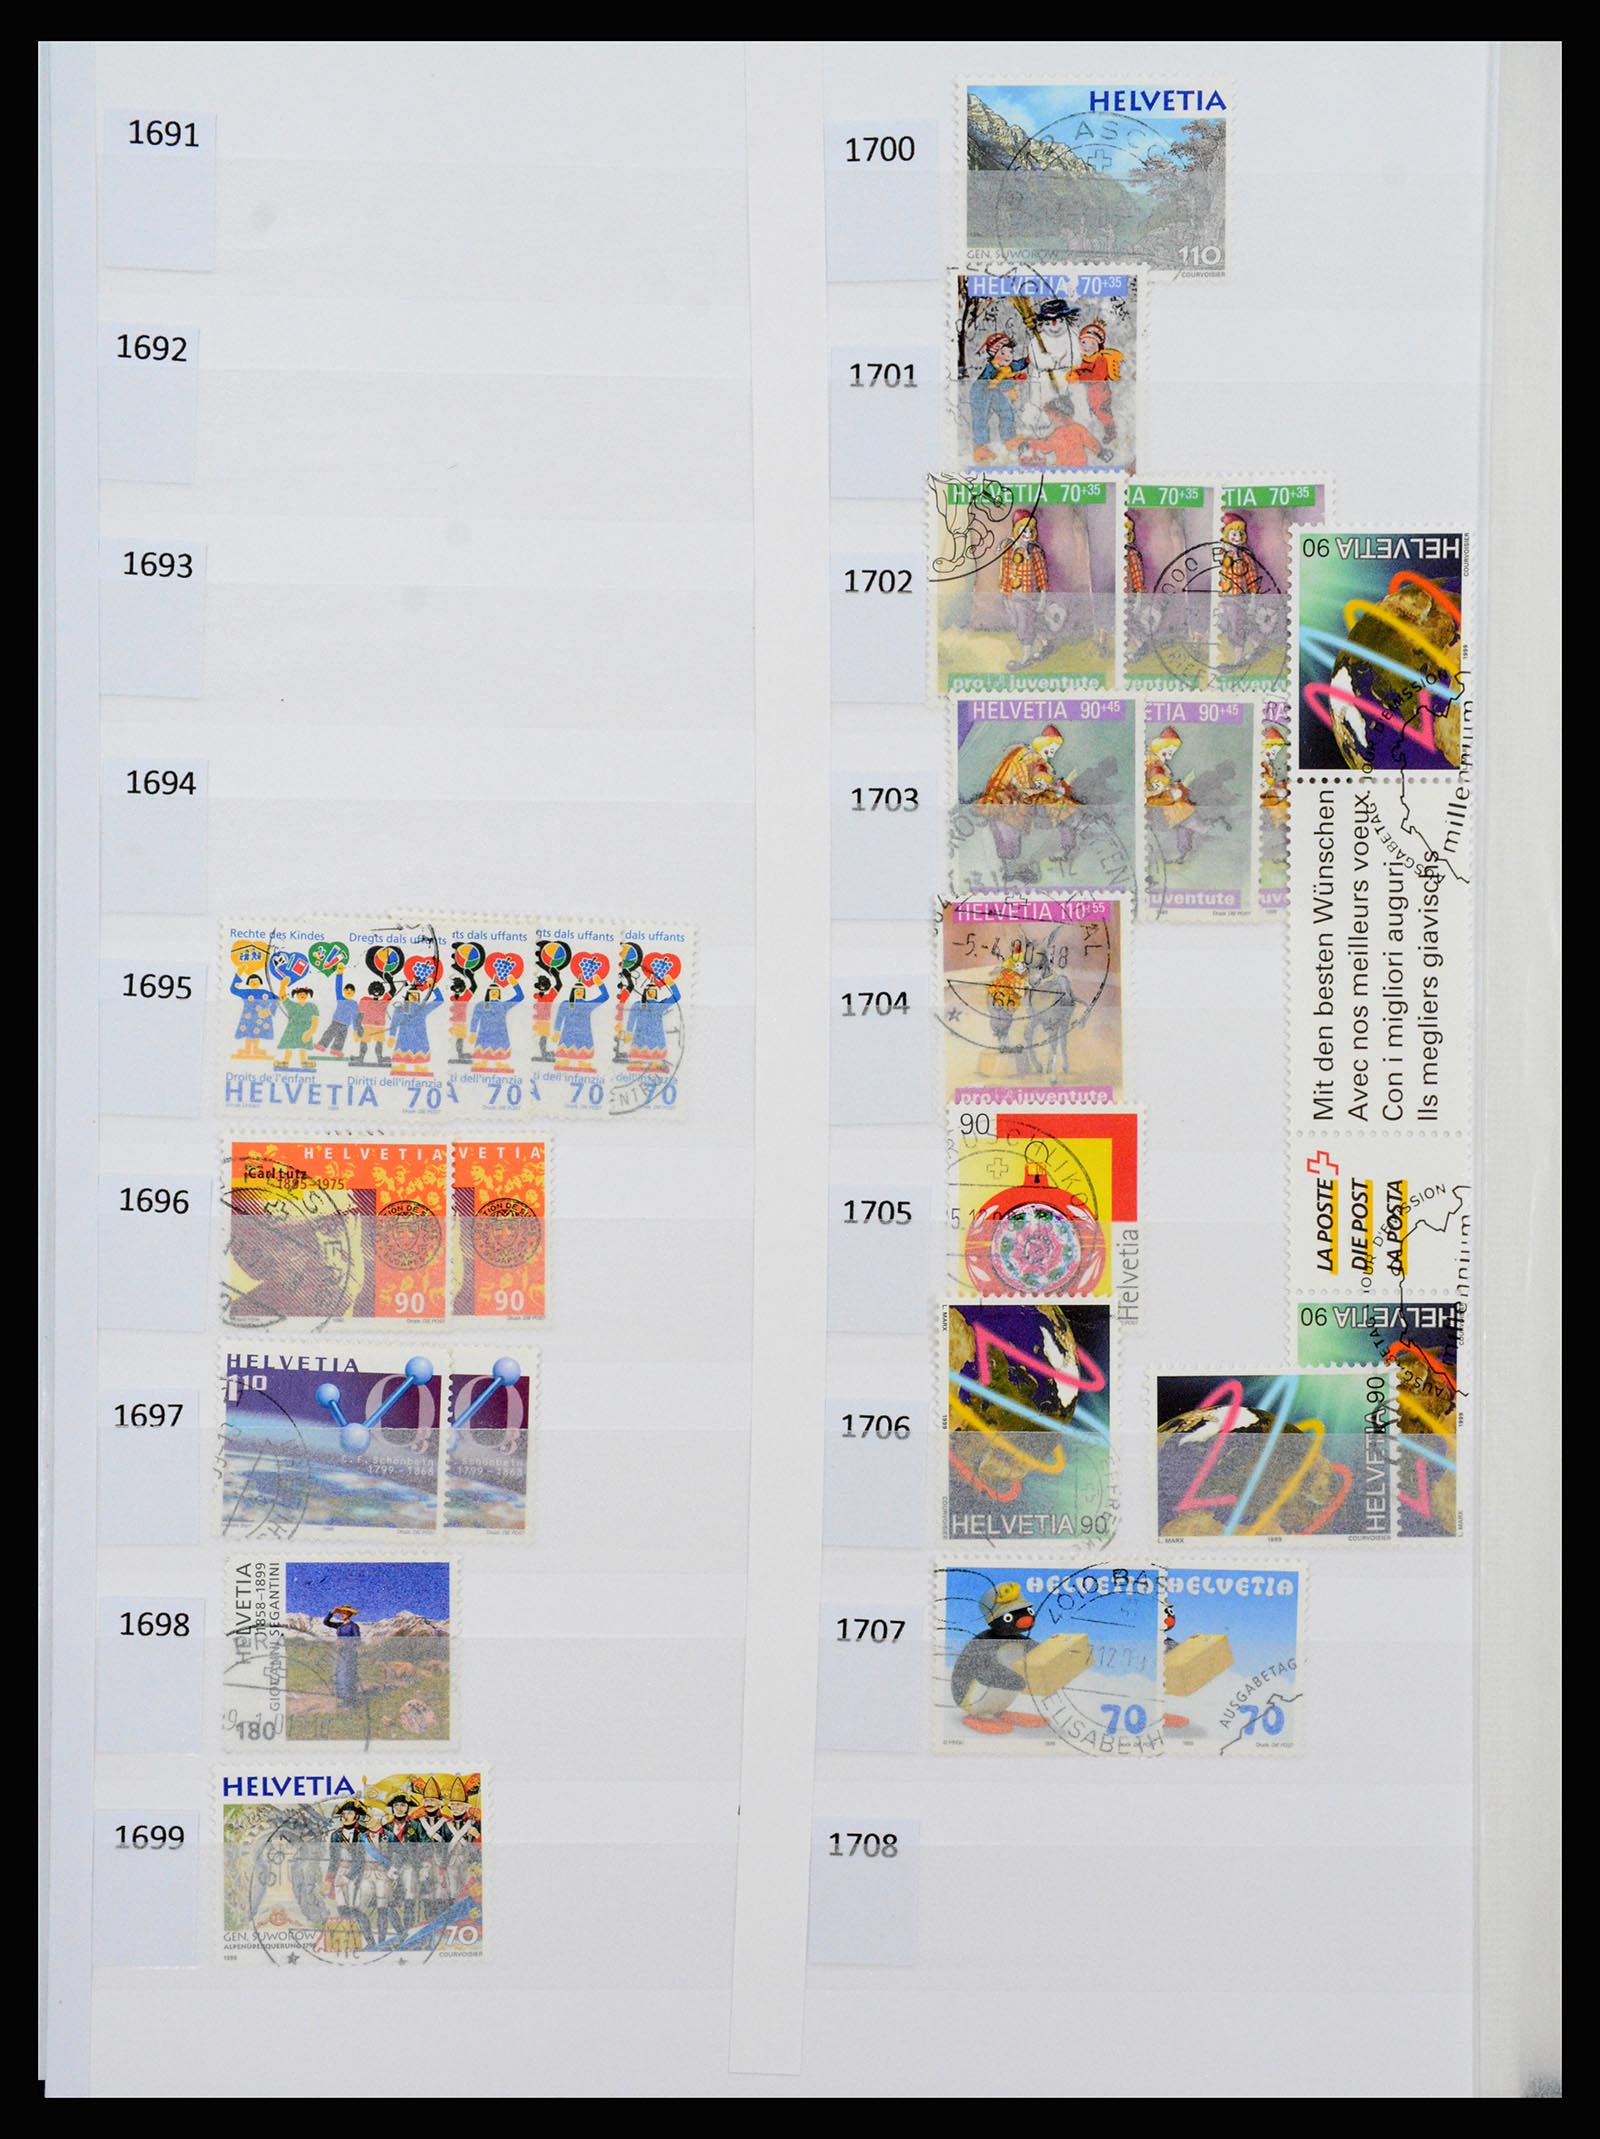 37252 095 - Stamp collection 37252 Switzerland 1900-2011.